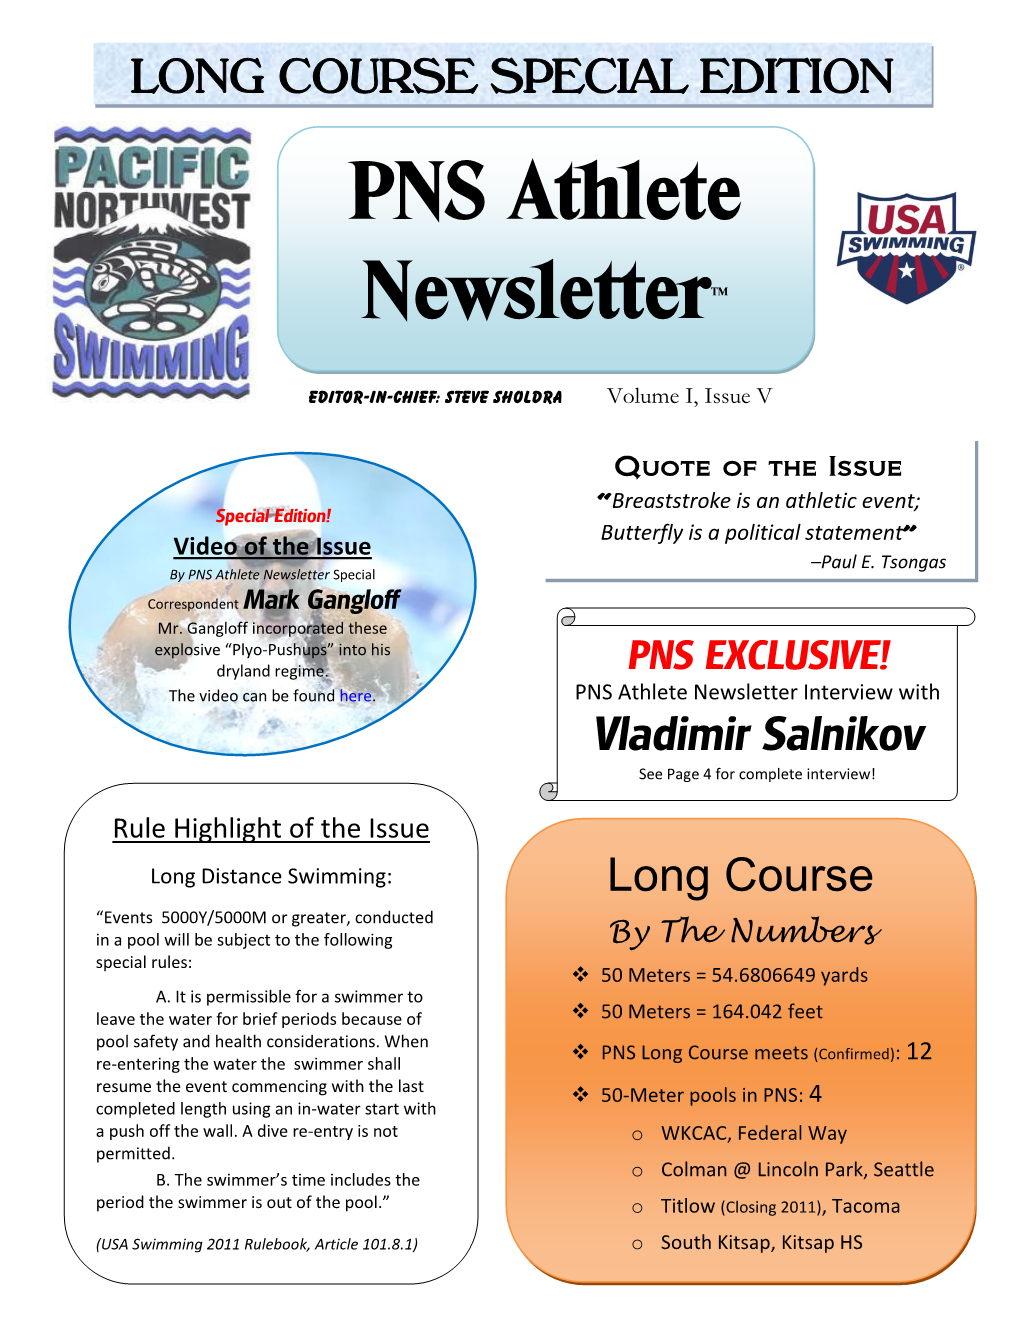 PNS Athlete Newsletter™